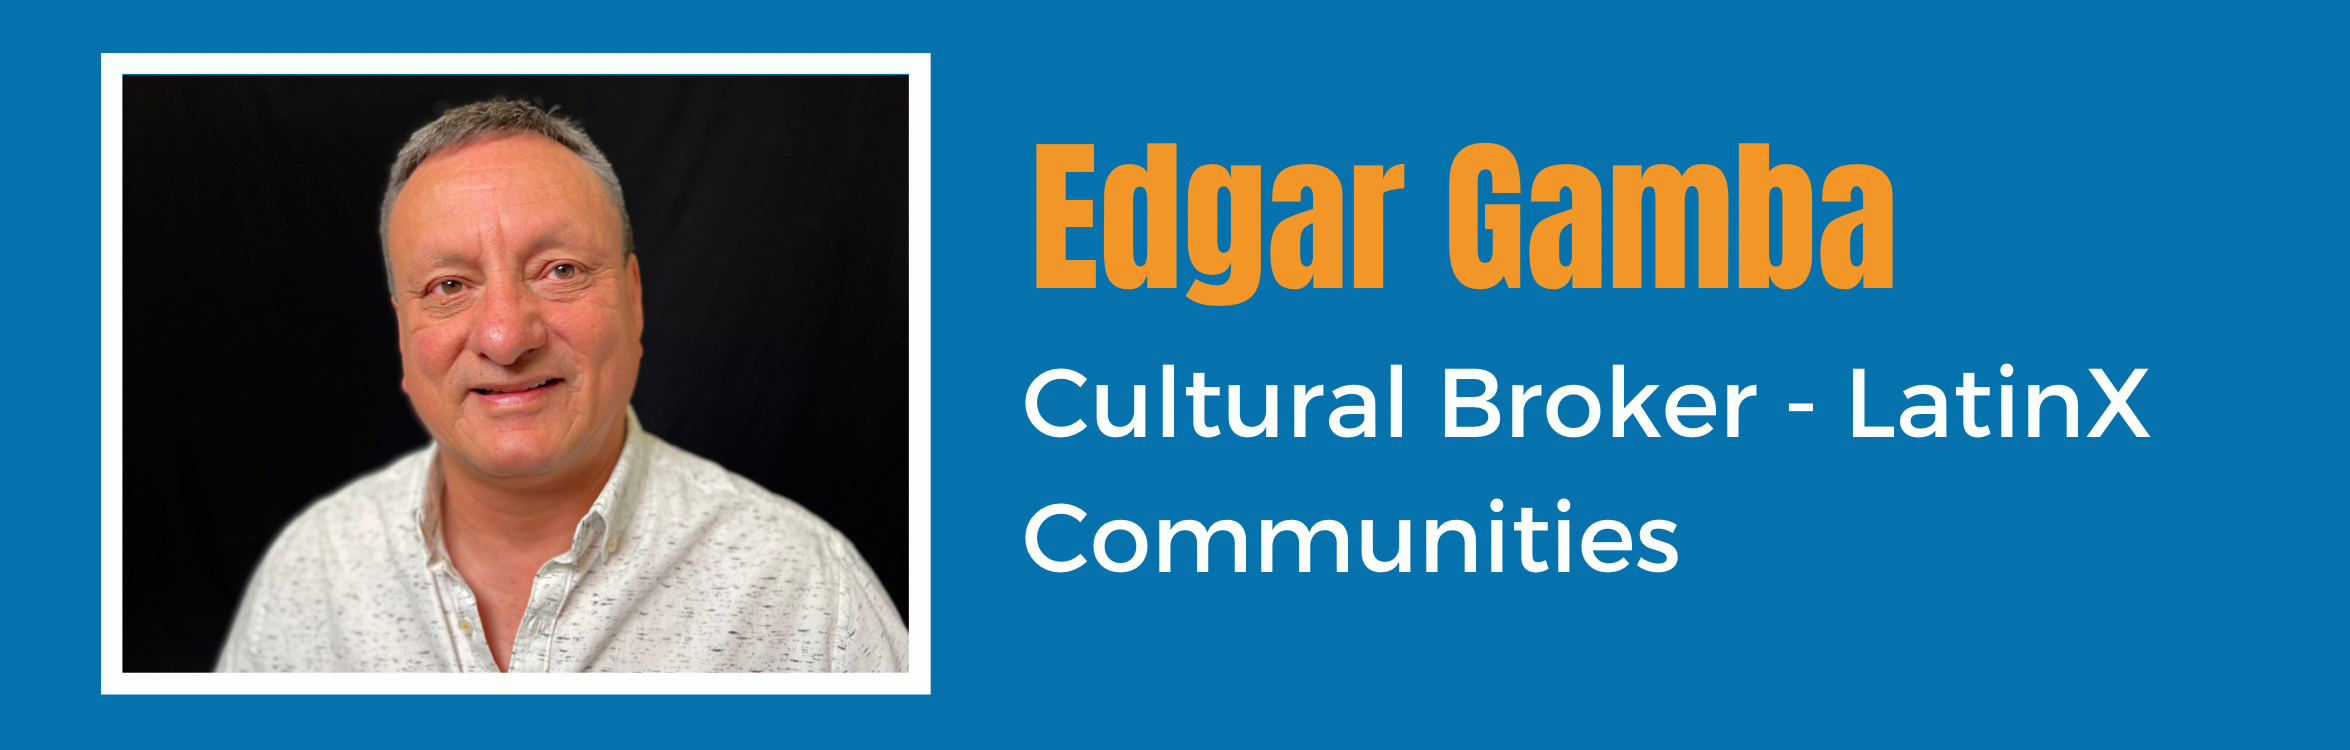 Edgar Gamba - Cultural Broker - LatinX Communities